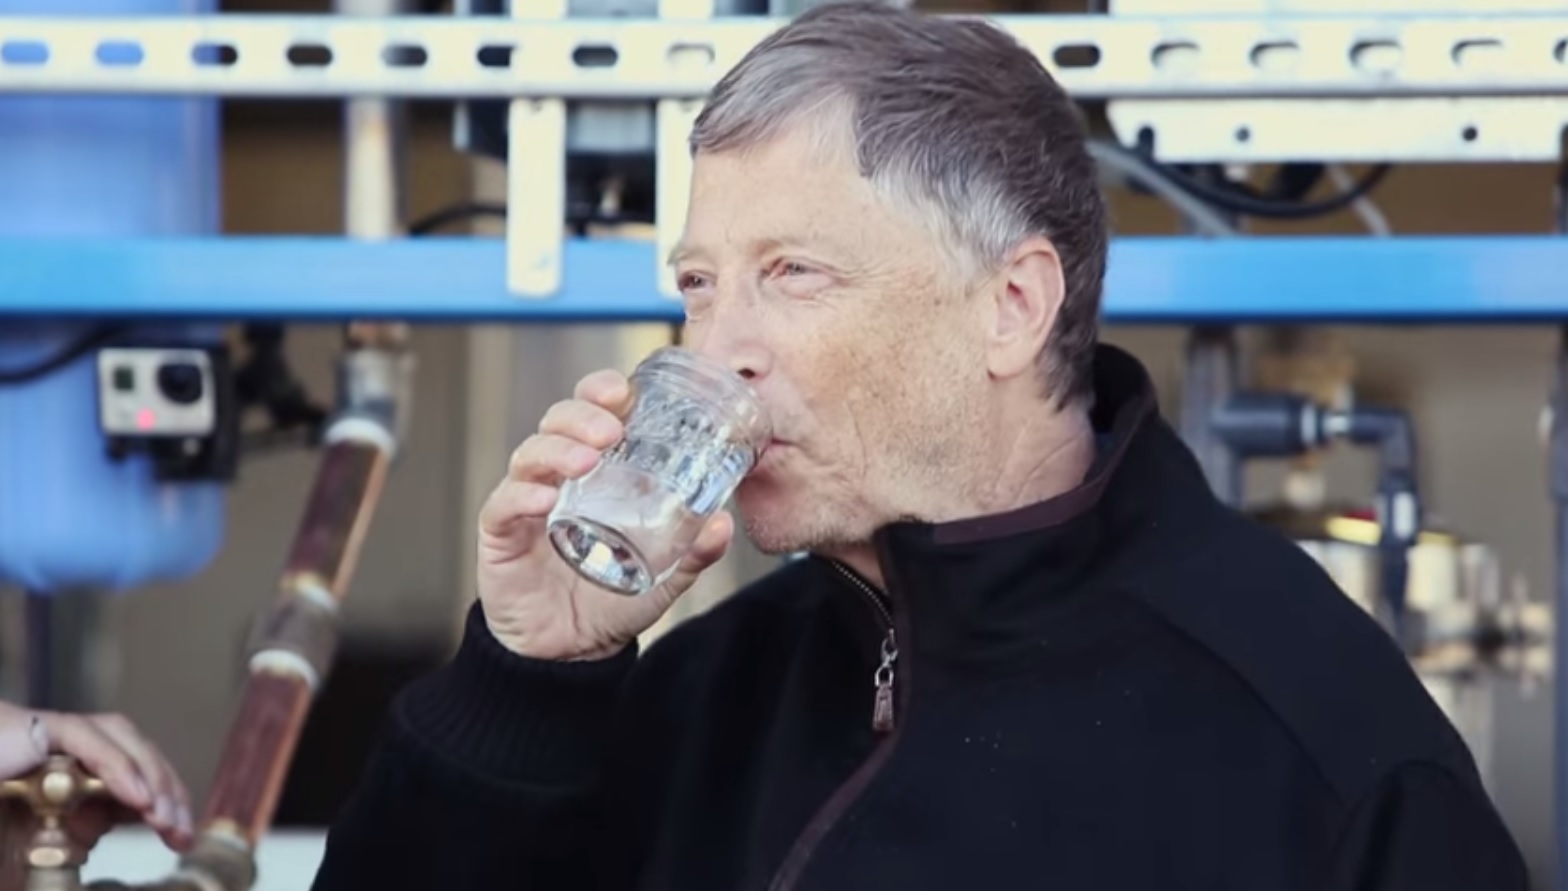 Bill Gates bebe água feita a partir de fezes humanas [vídeo]